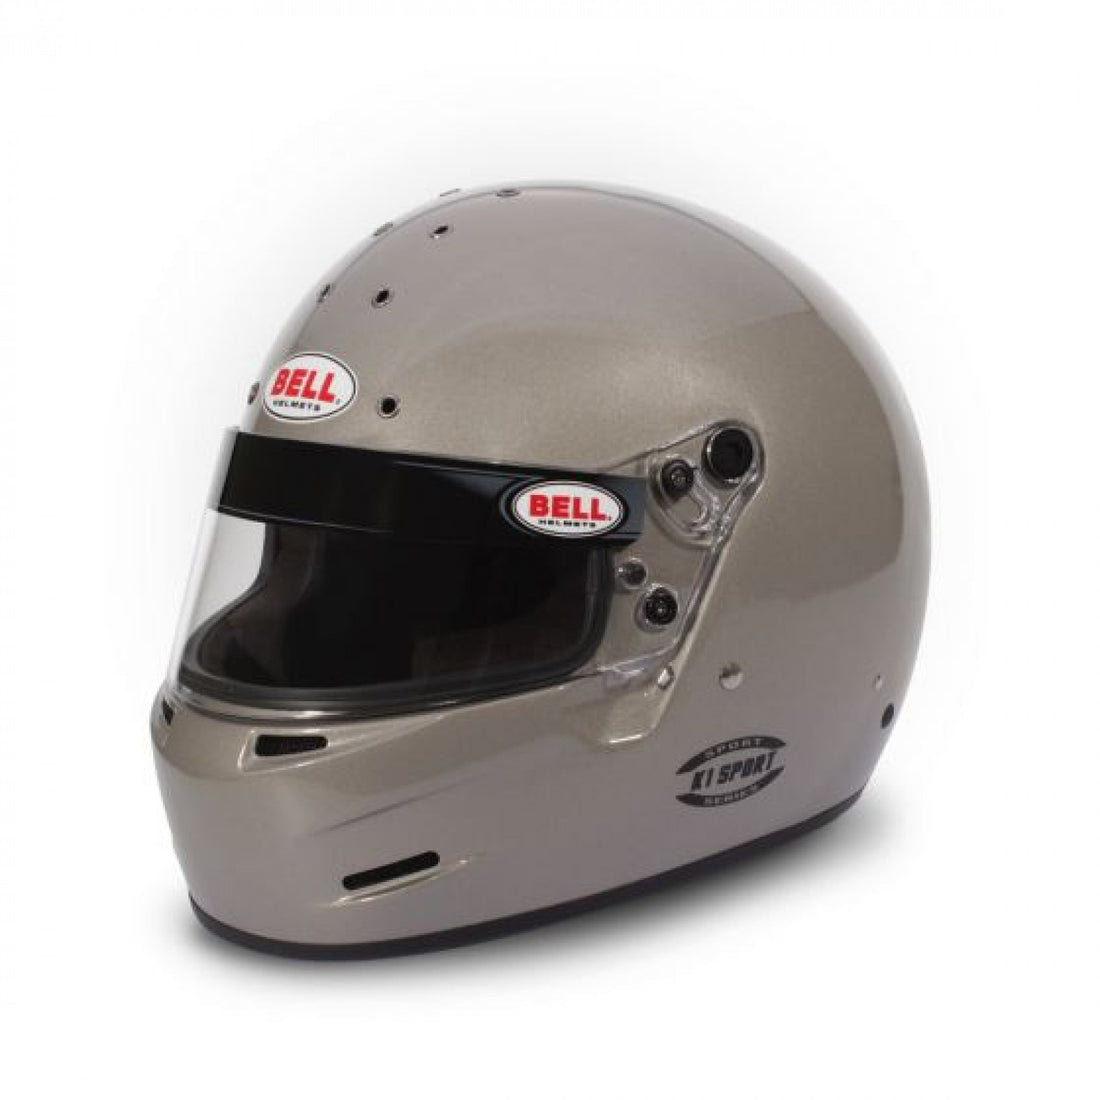 Bell K1 Sport Titanium Helmet Medium (58-59)